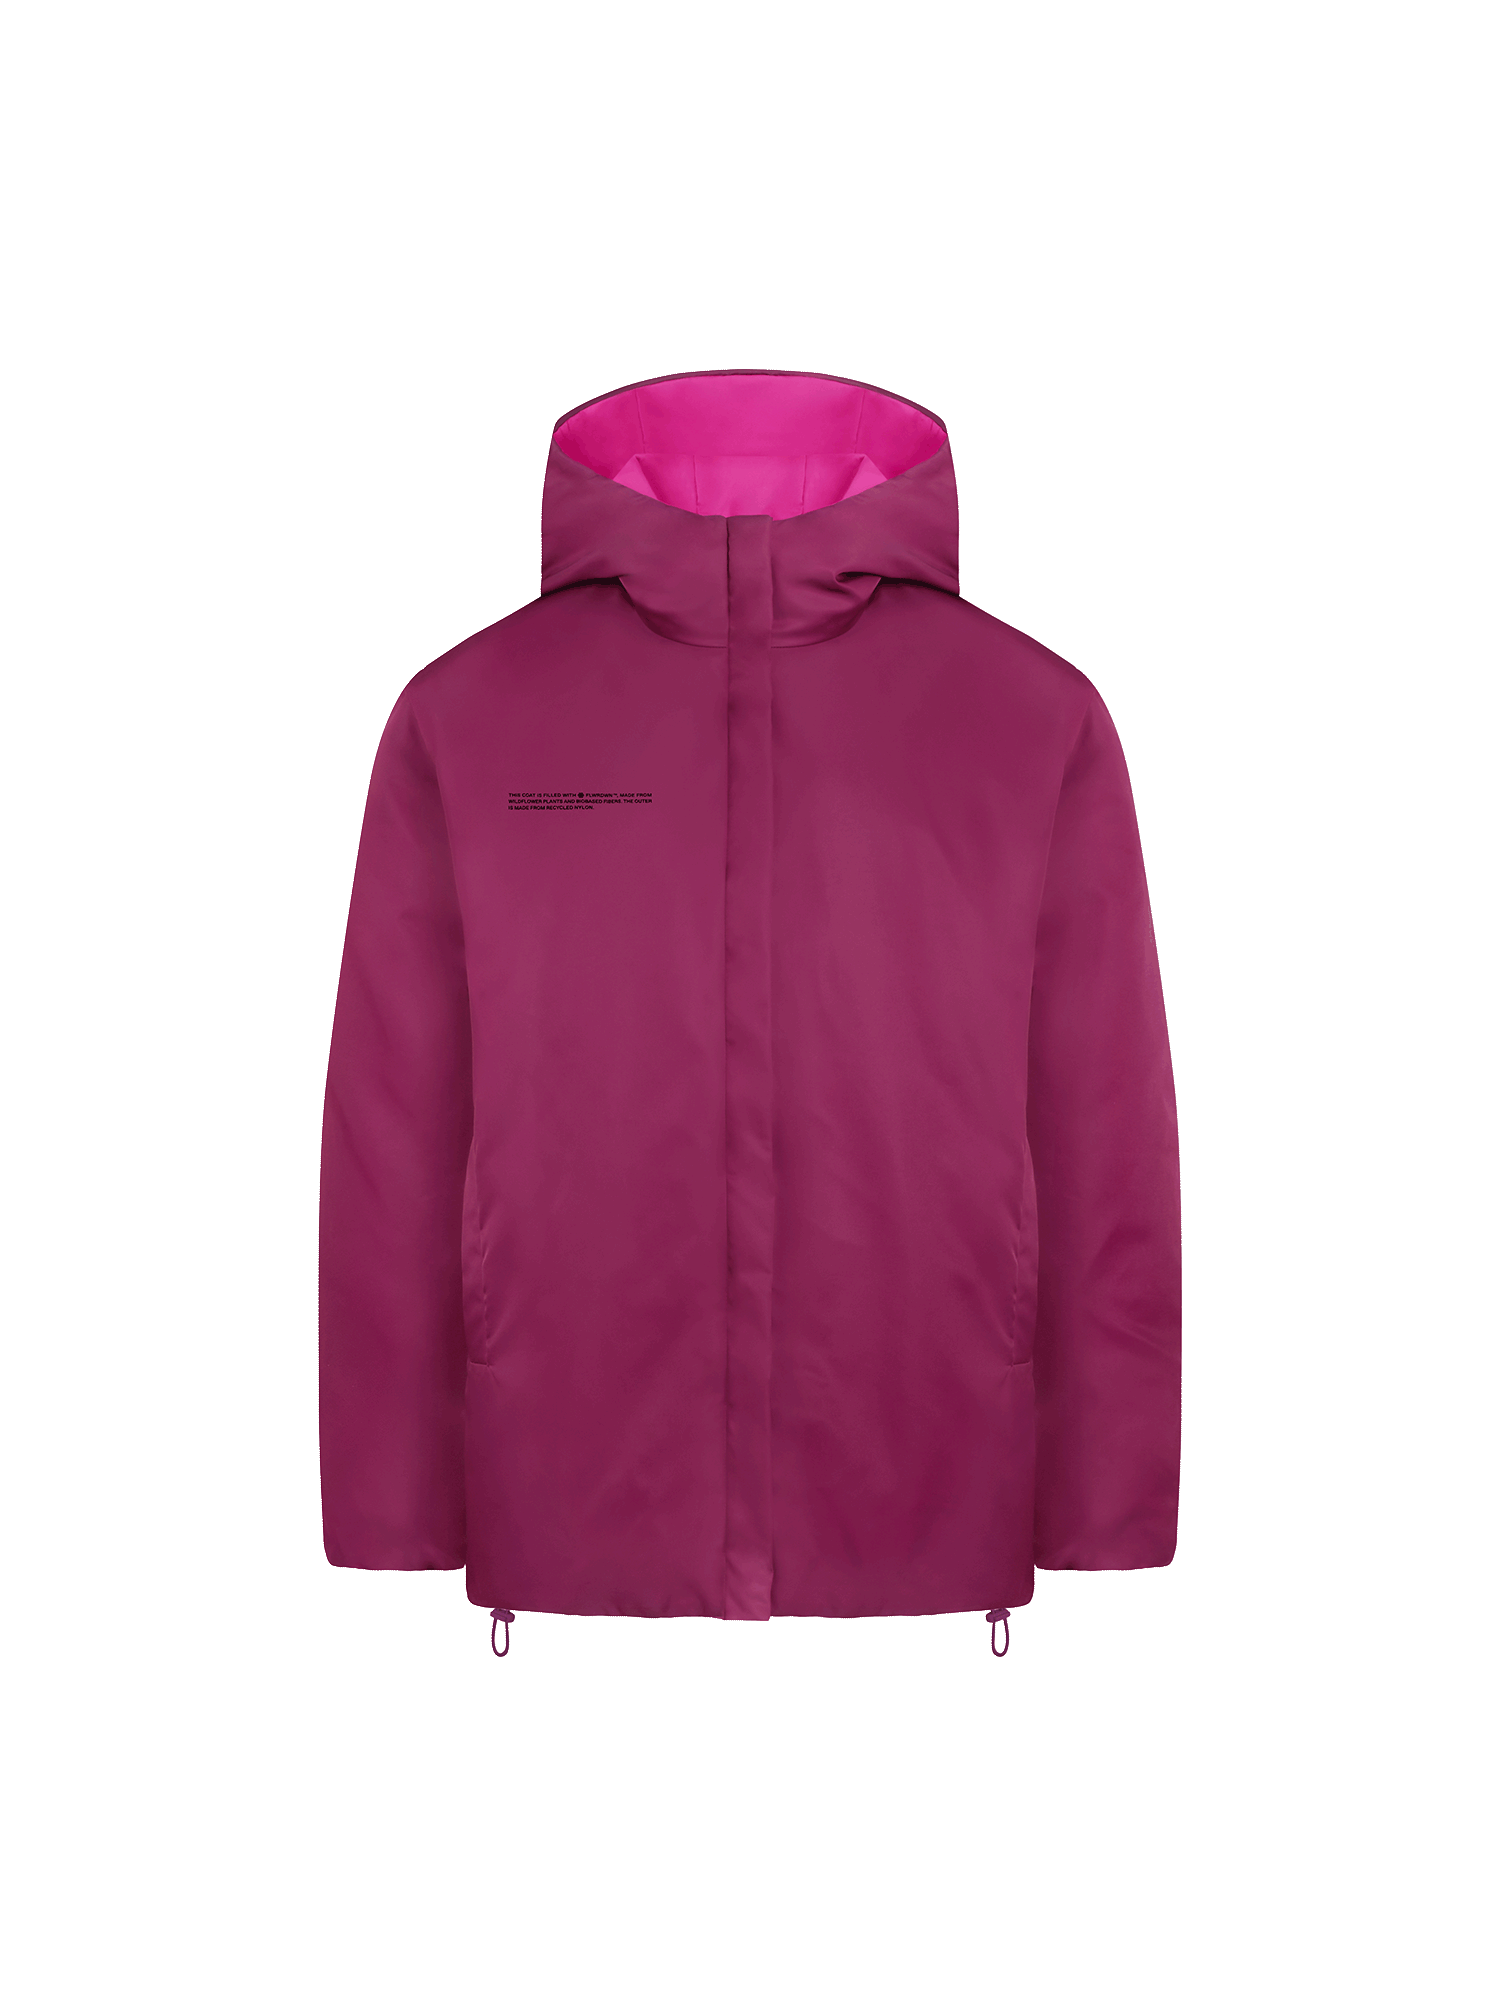 PANGAIA - FLWRDWN Reversible Jacket - Plum Purple / Foxglove Pink XXS